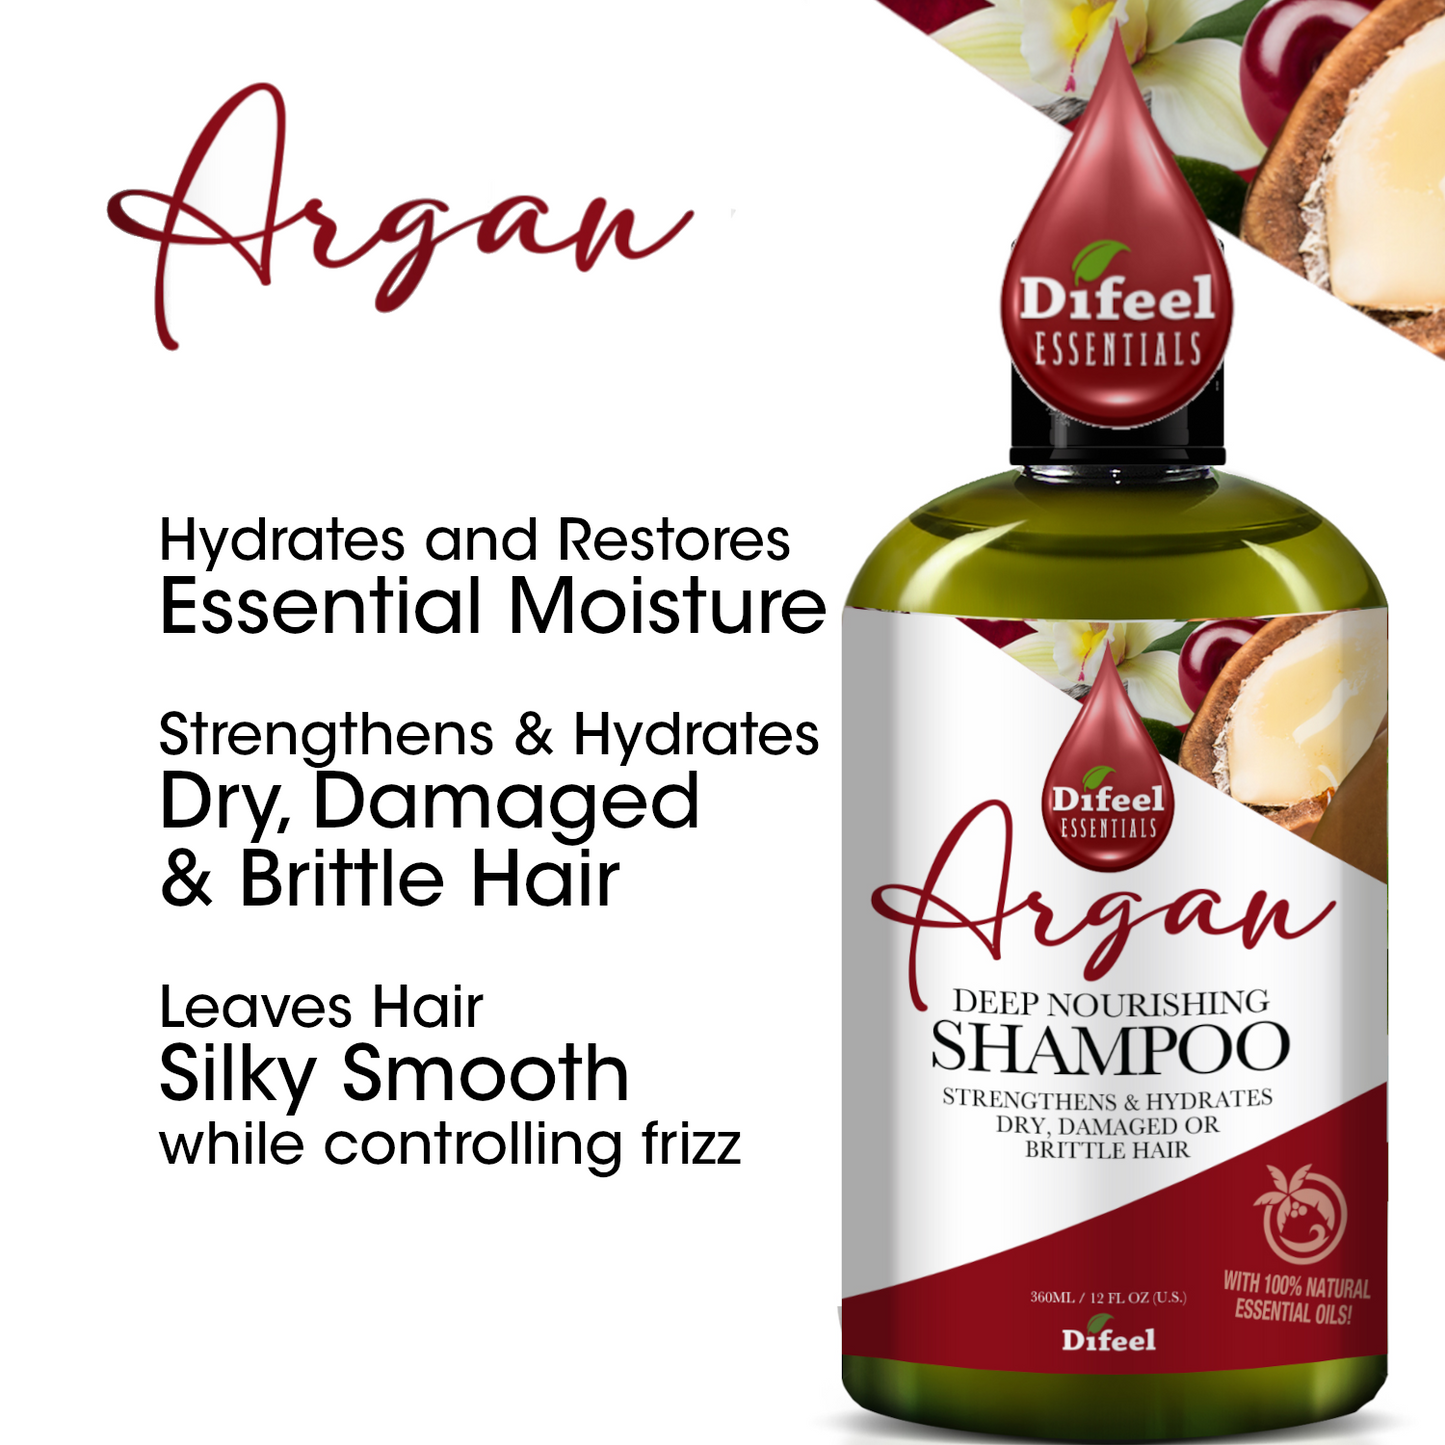 Difeel Essentials Deep Nourishing Argan - Shampoo 12 oz. by difeel - find your natural beauty